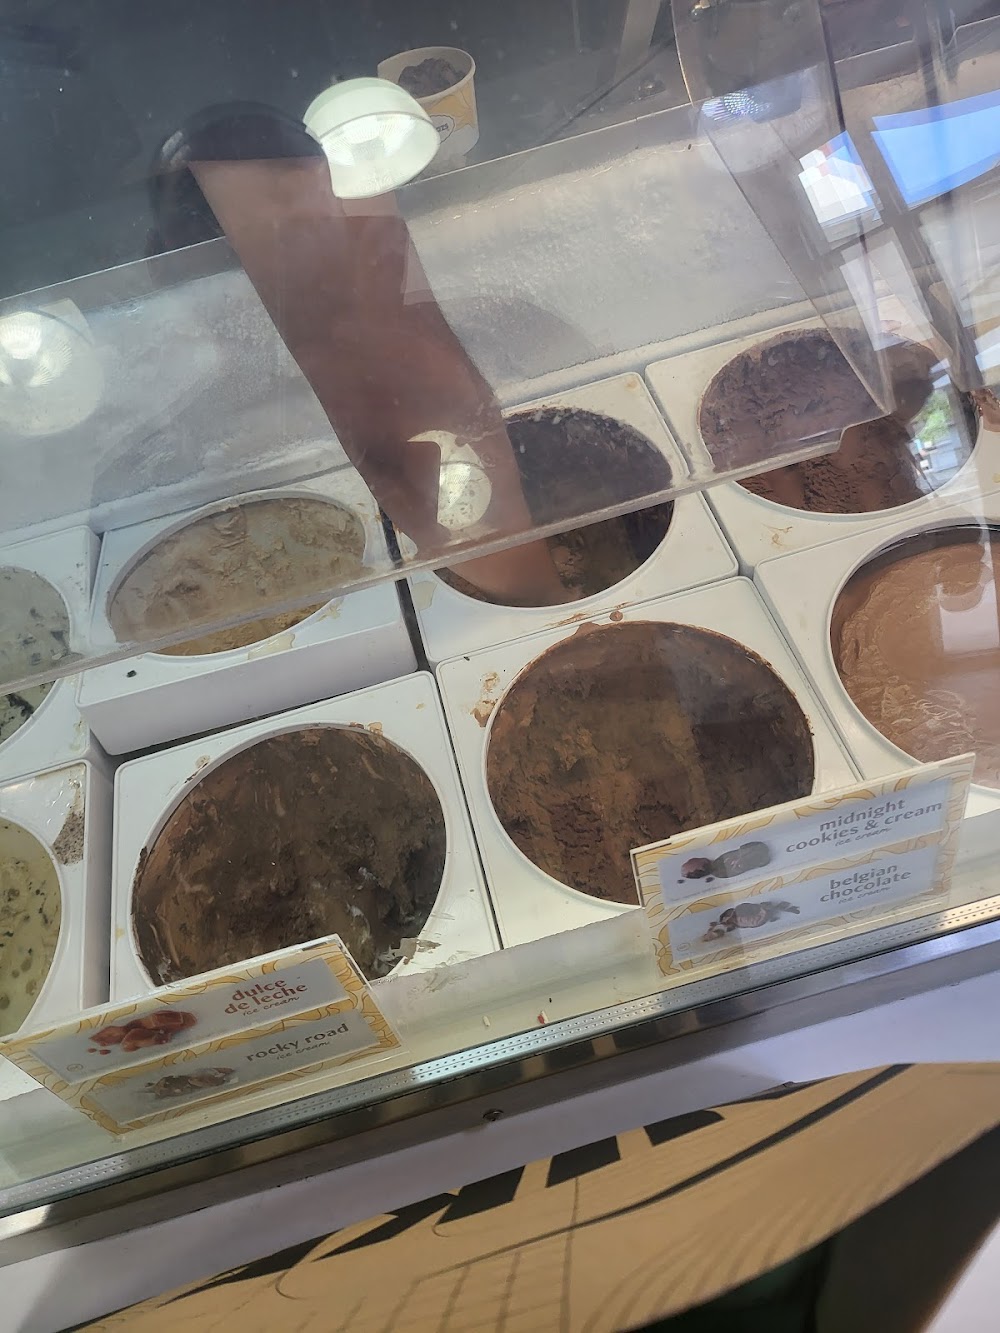 Haagen-Dazs Ice Cream